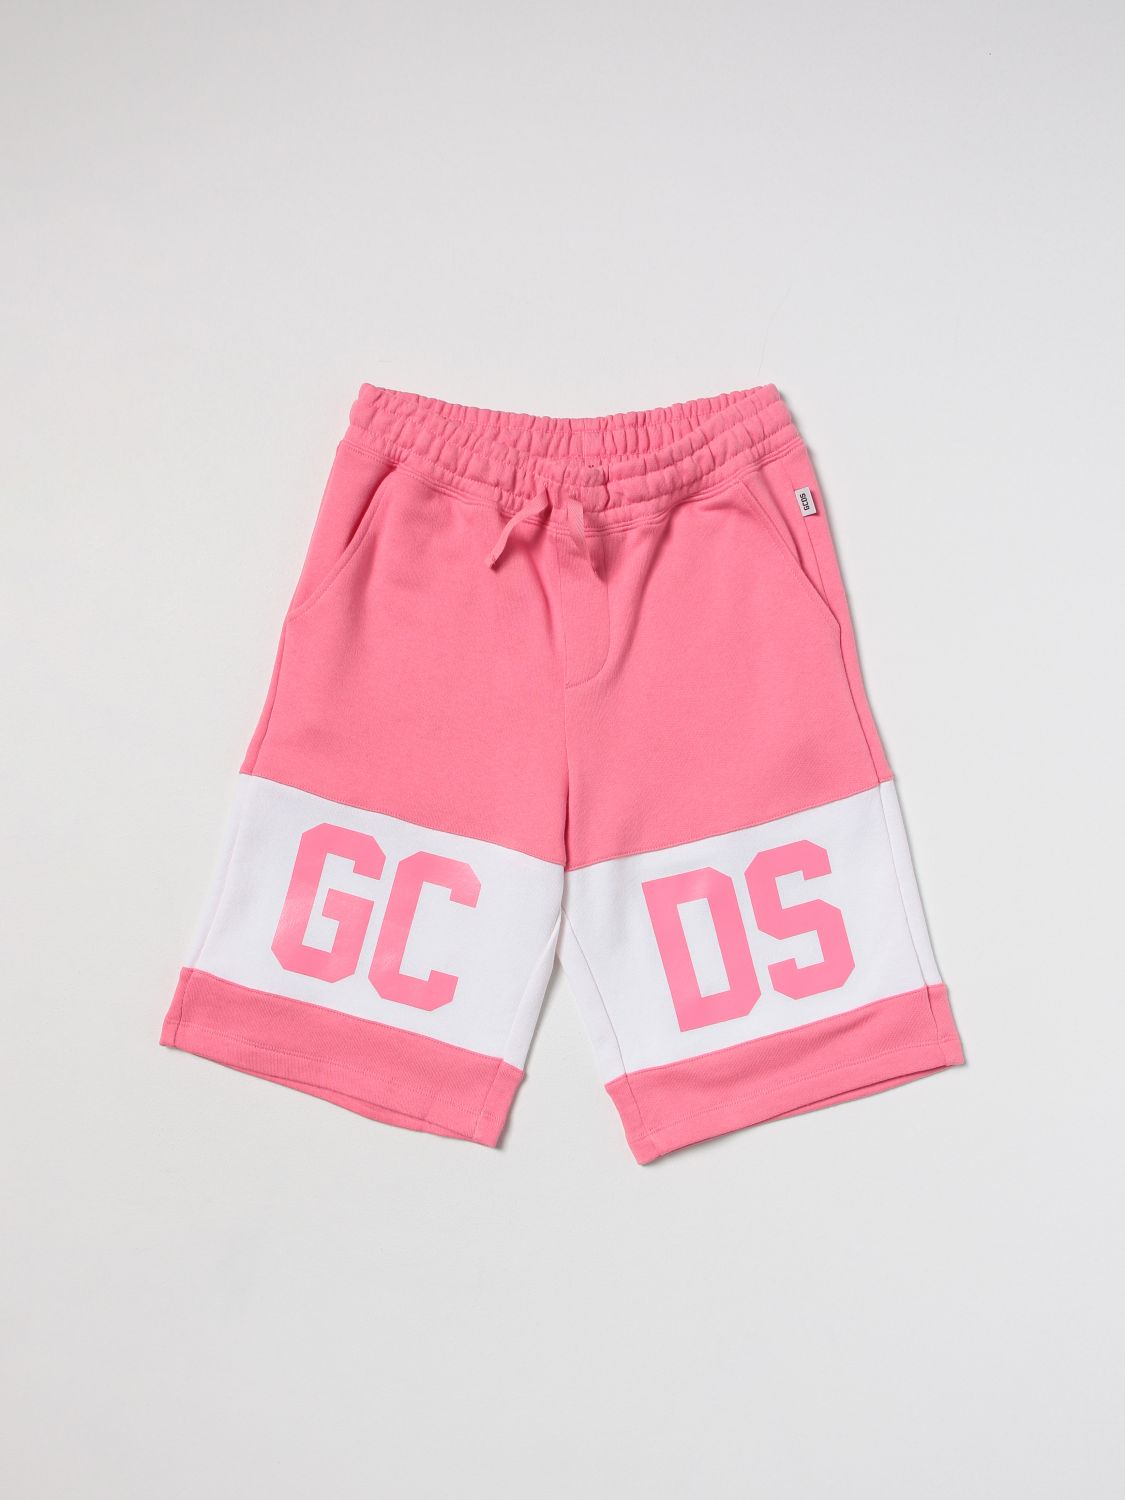 Gcds Shorts  Kids Kids Colour Pink